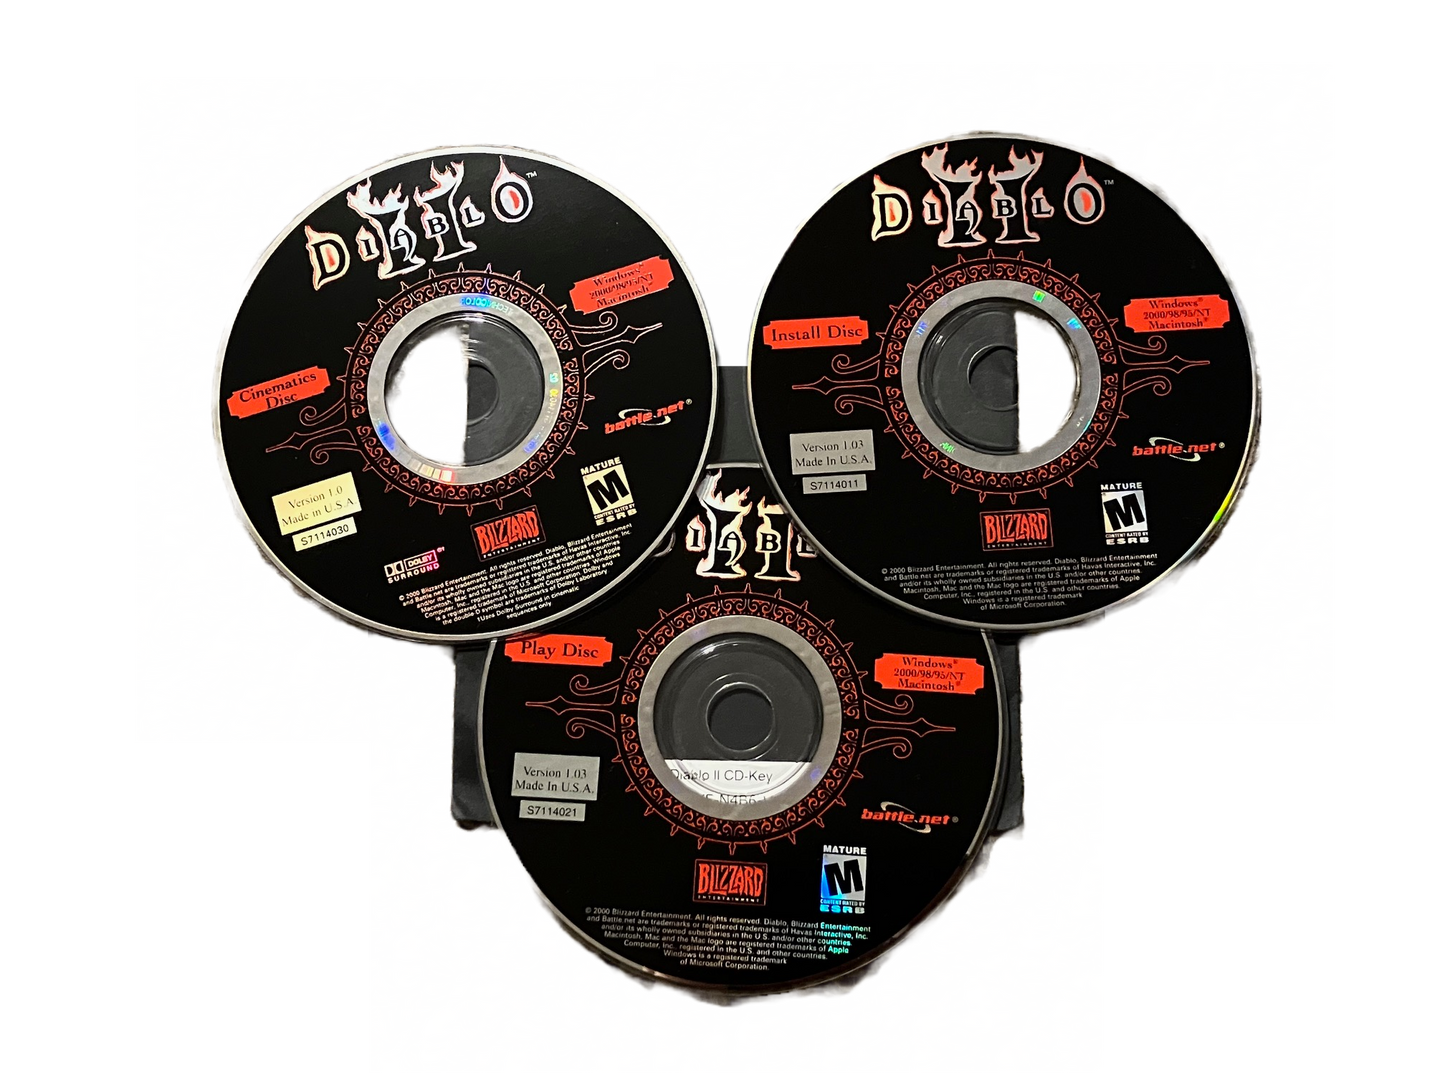 Diablo II PC CD Rom Game.